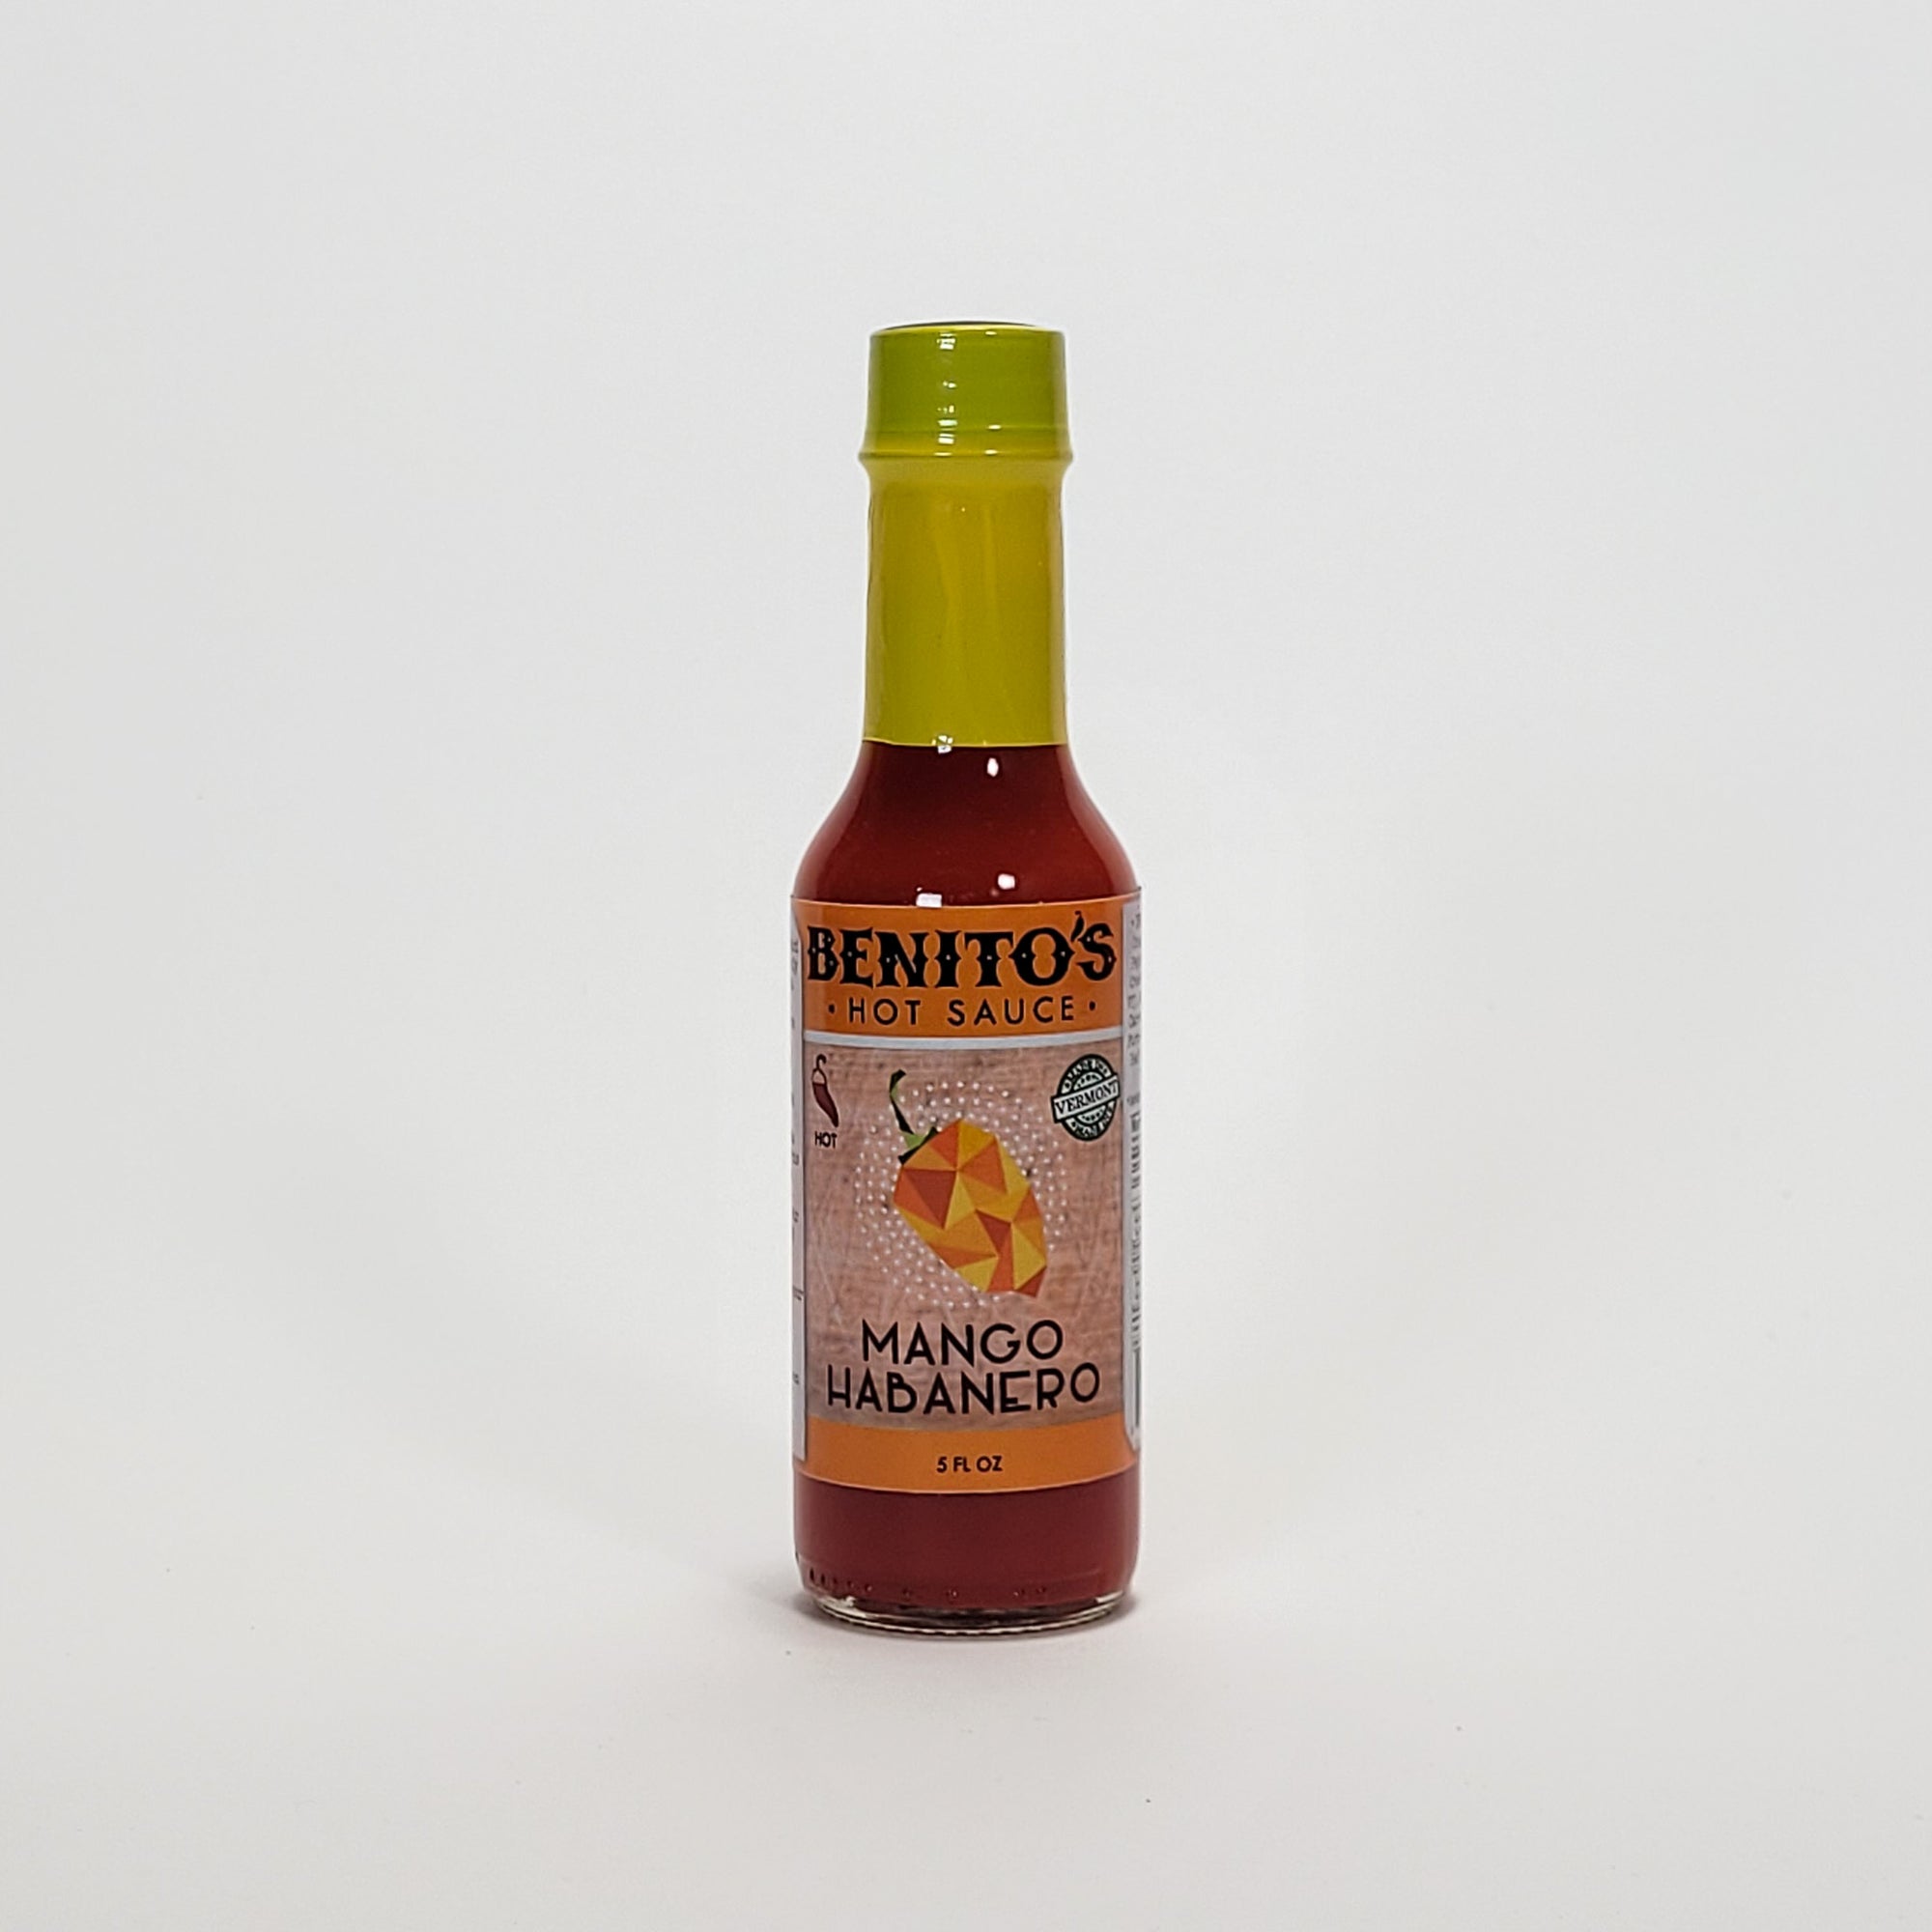 Benito's Mango Habanero hot sauce